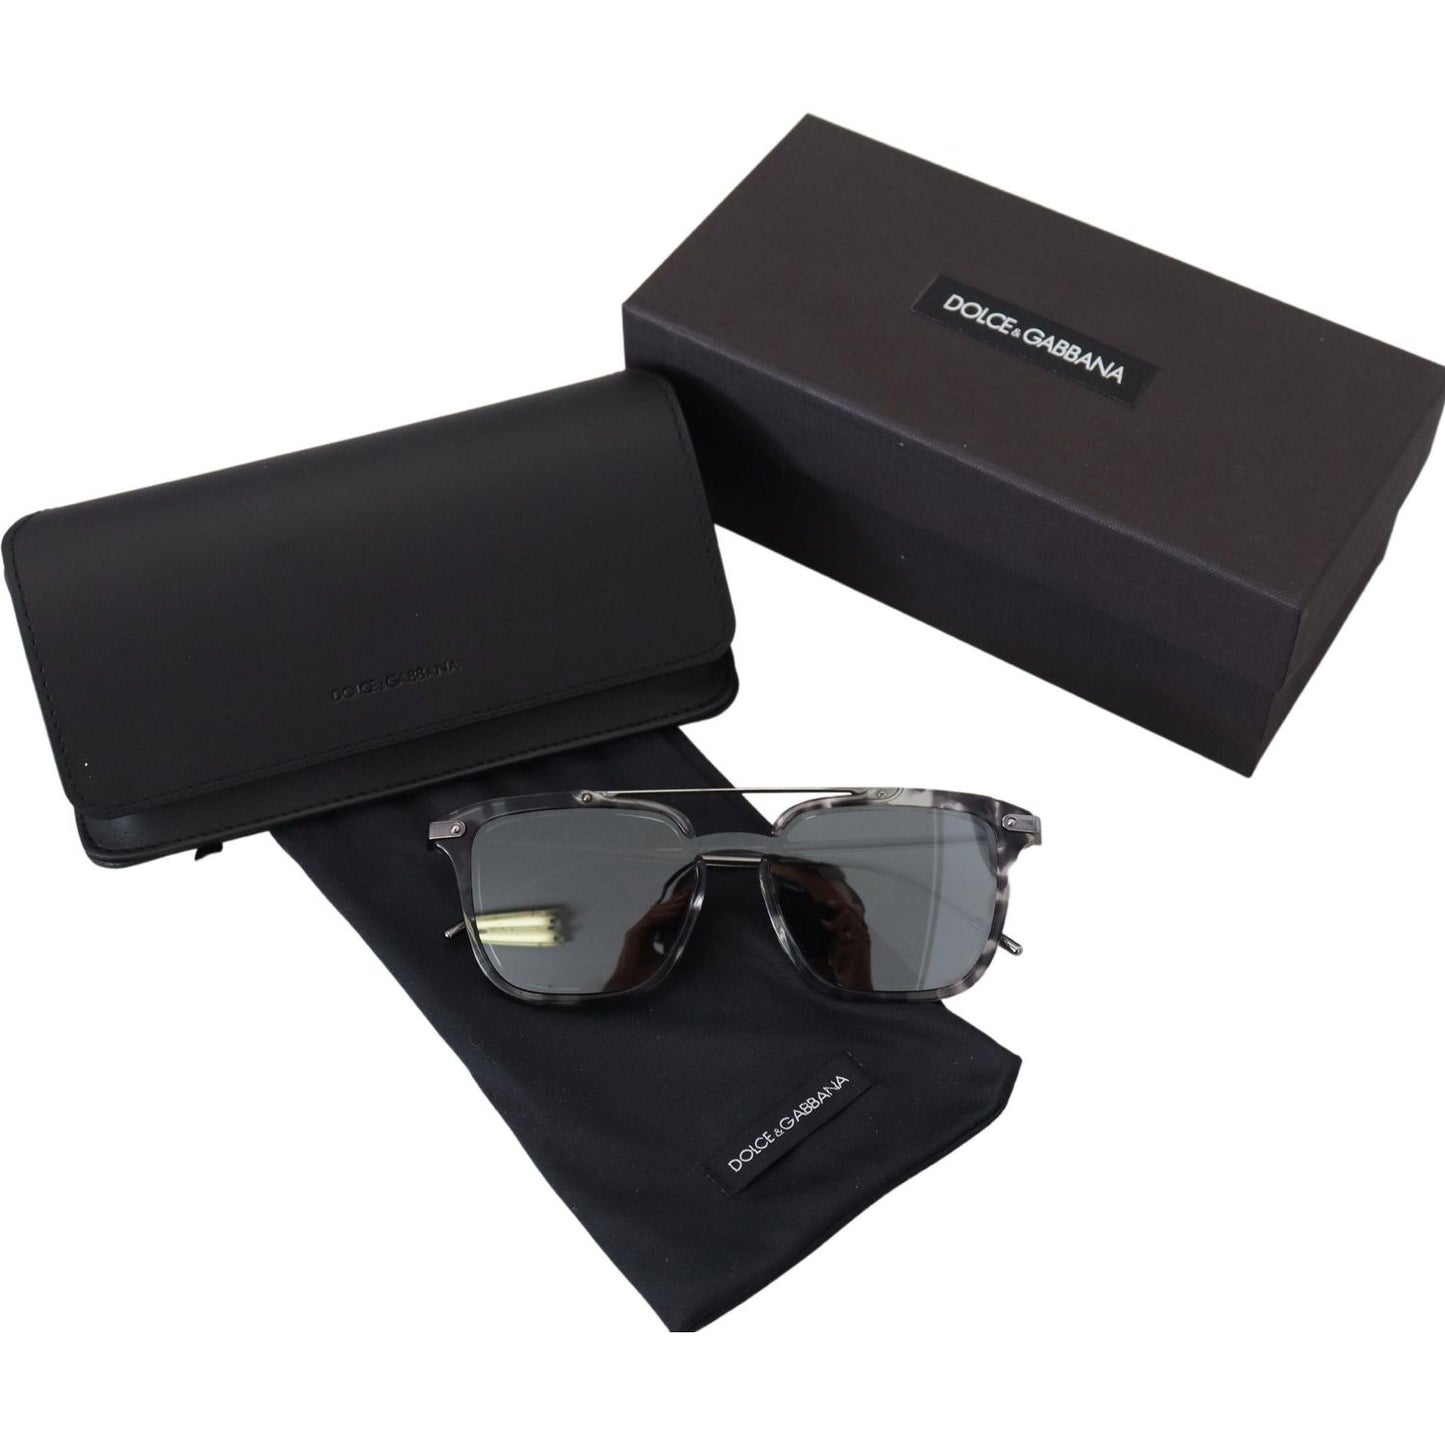 Dolce & GabbanaStunning Grey Acetate SunglassesMcRichard Designer Brands£209.00